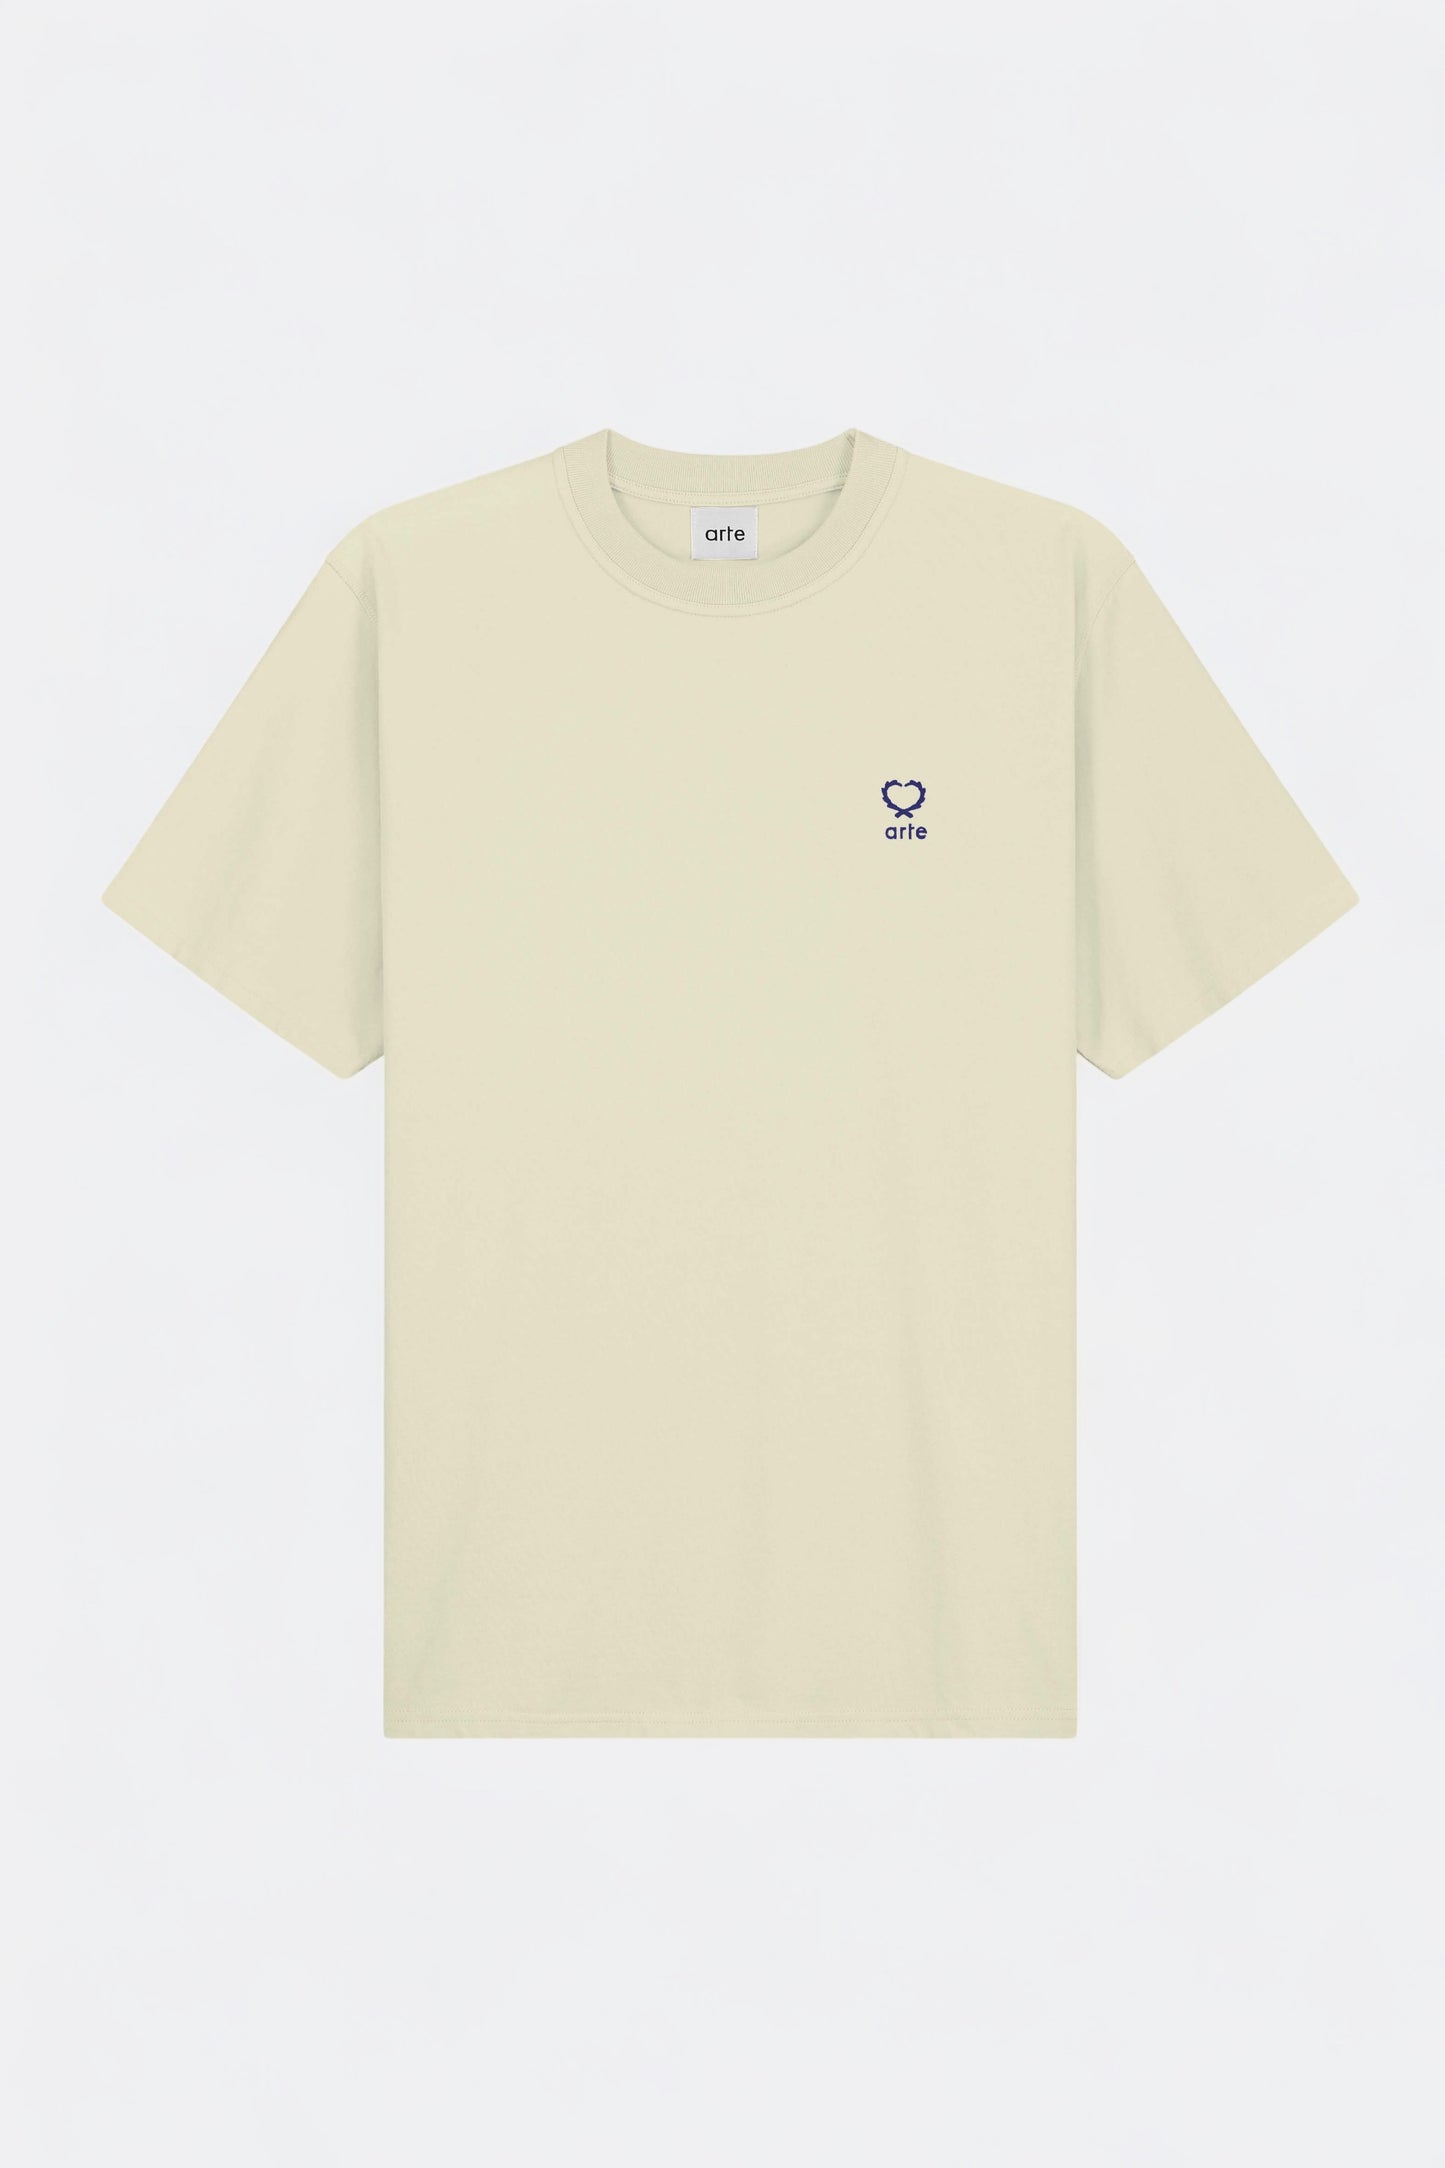 Arte - Teo Small Heart T-shirt (Cream)